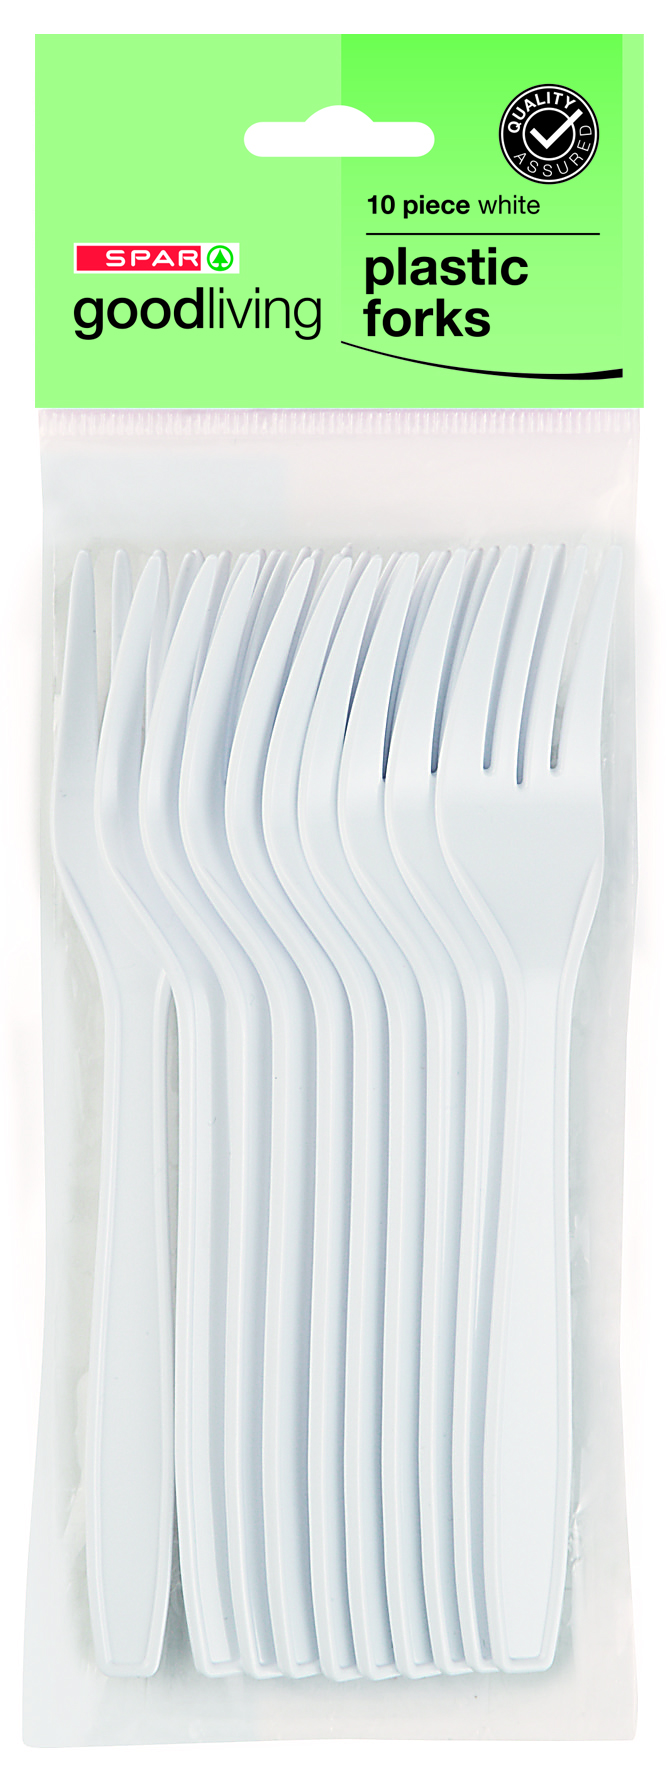 plastic forks - white (10 piece)